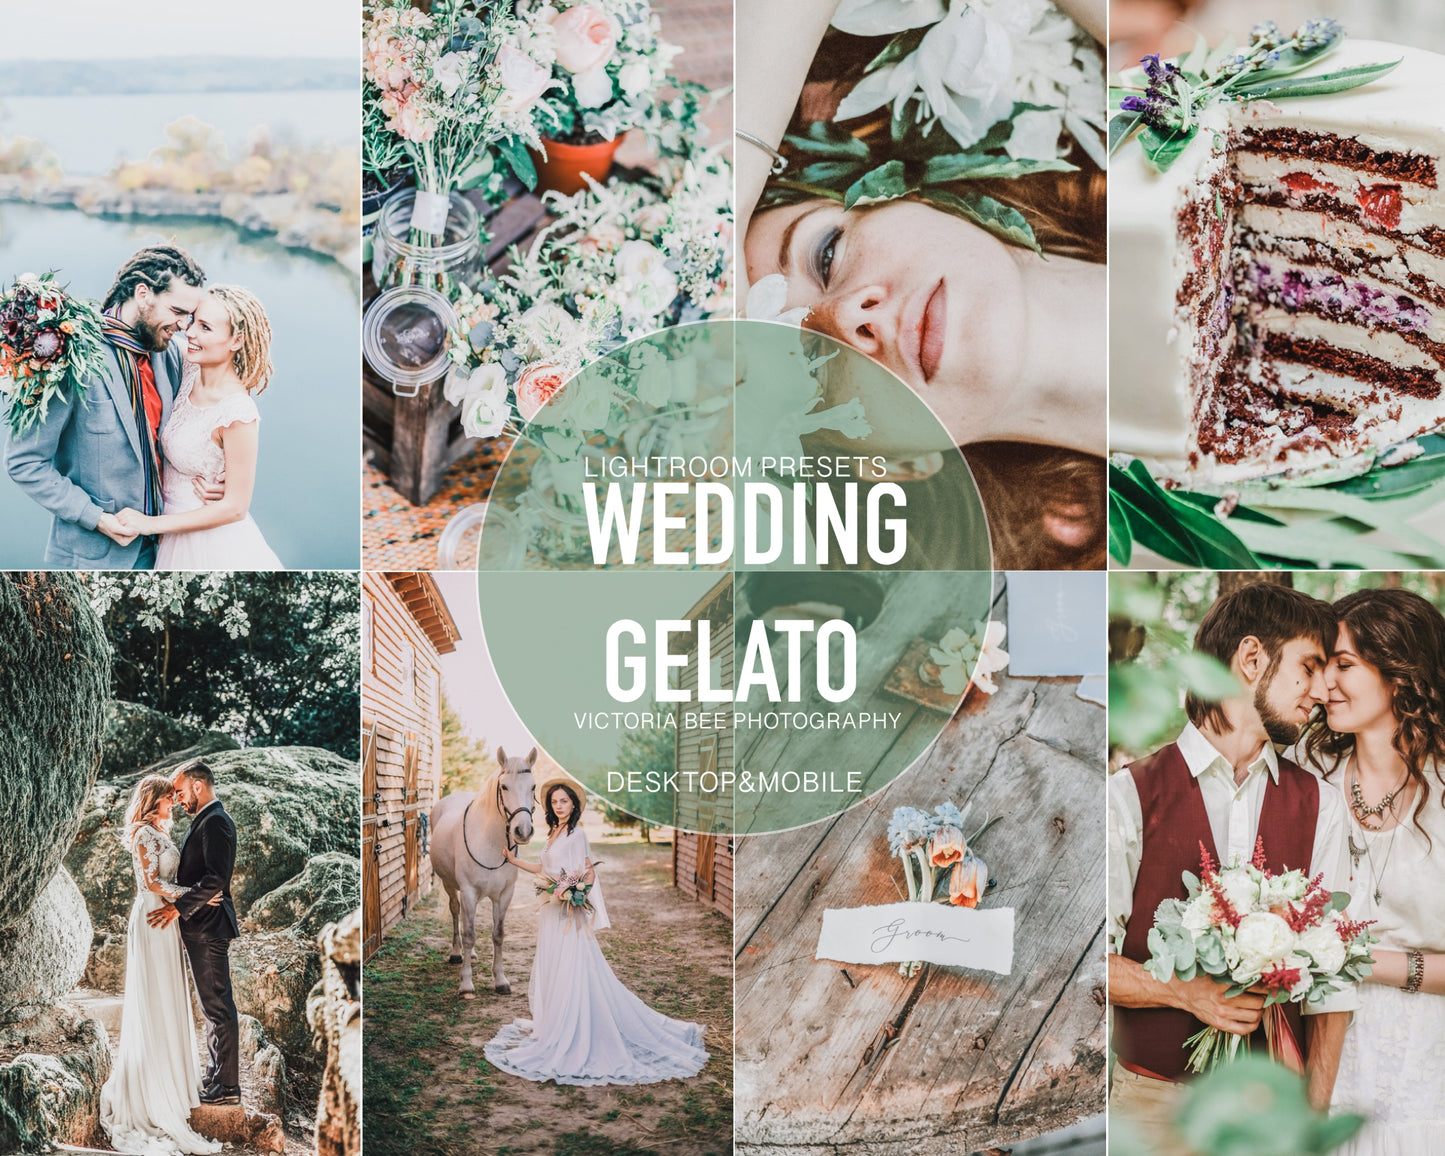 WEDDING GELATO